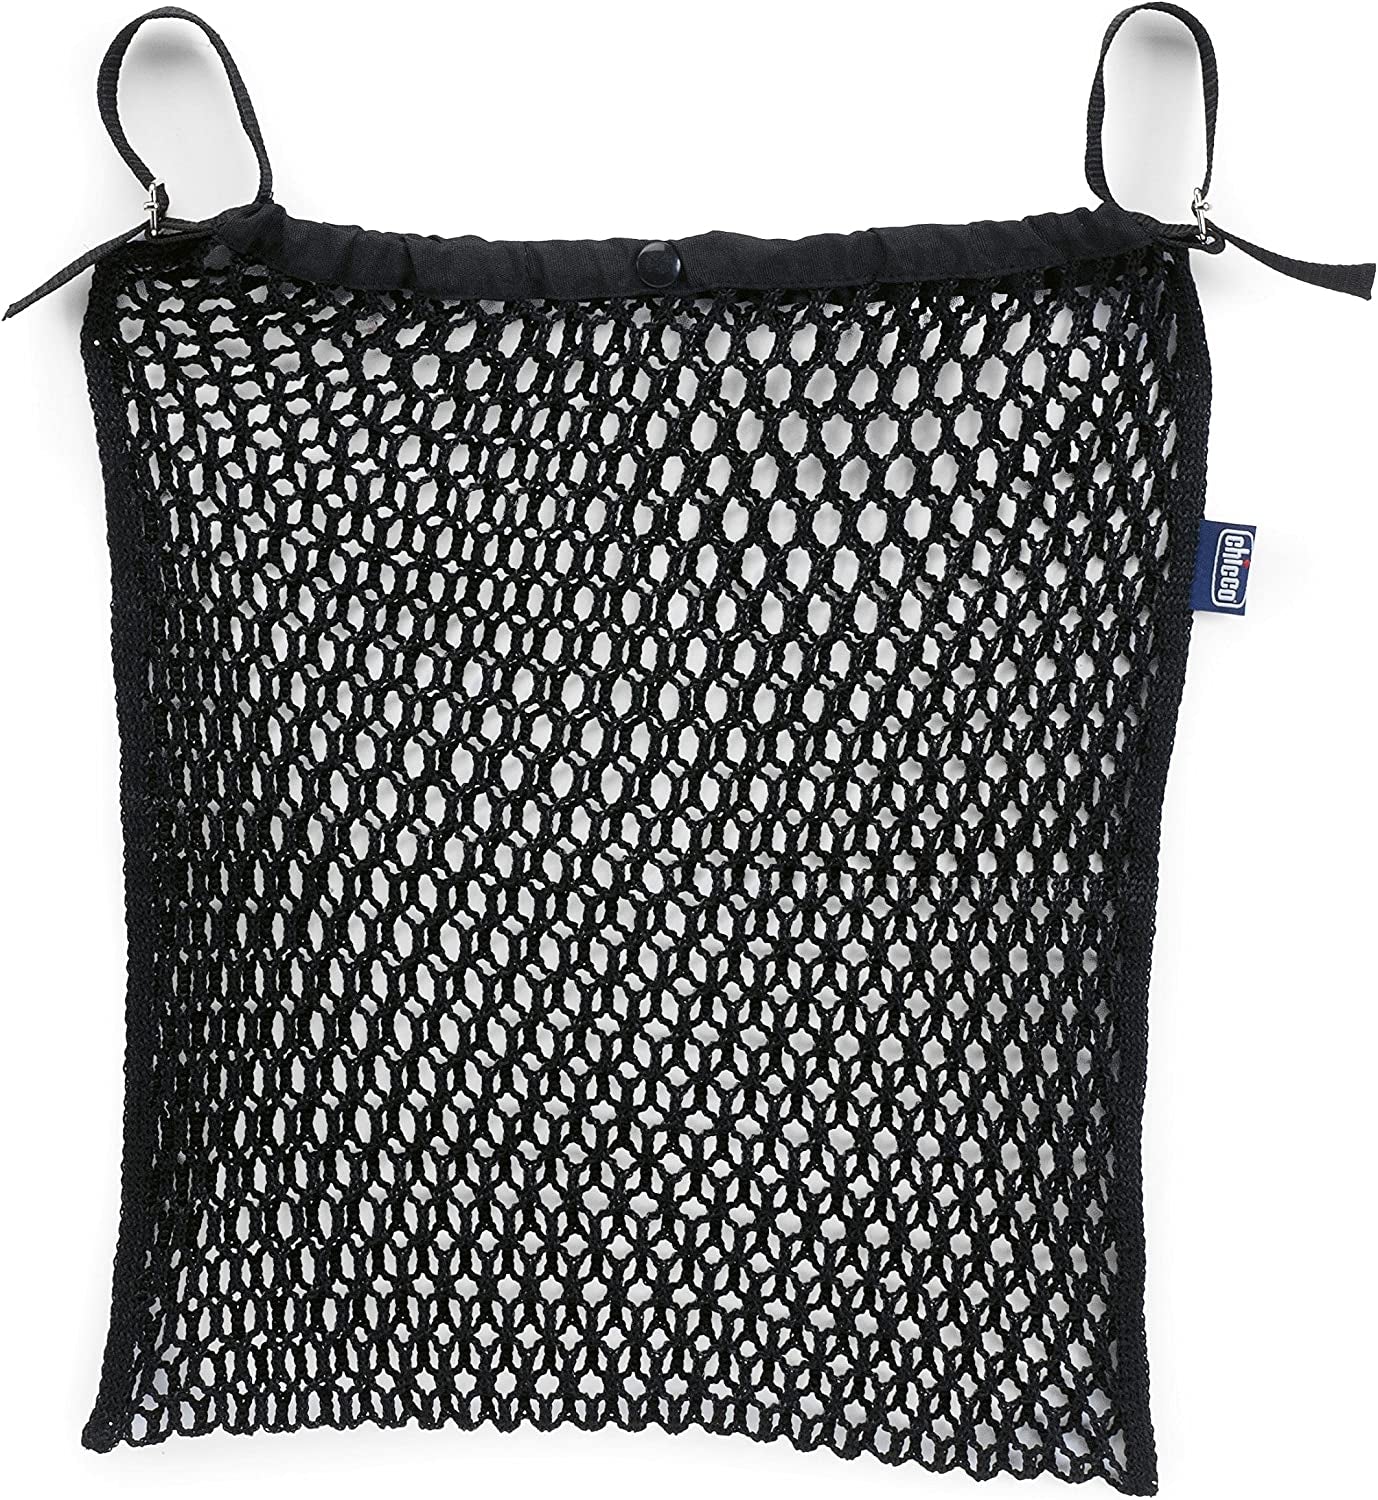 chicco Stroller Net Bag One Size Black